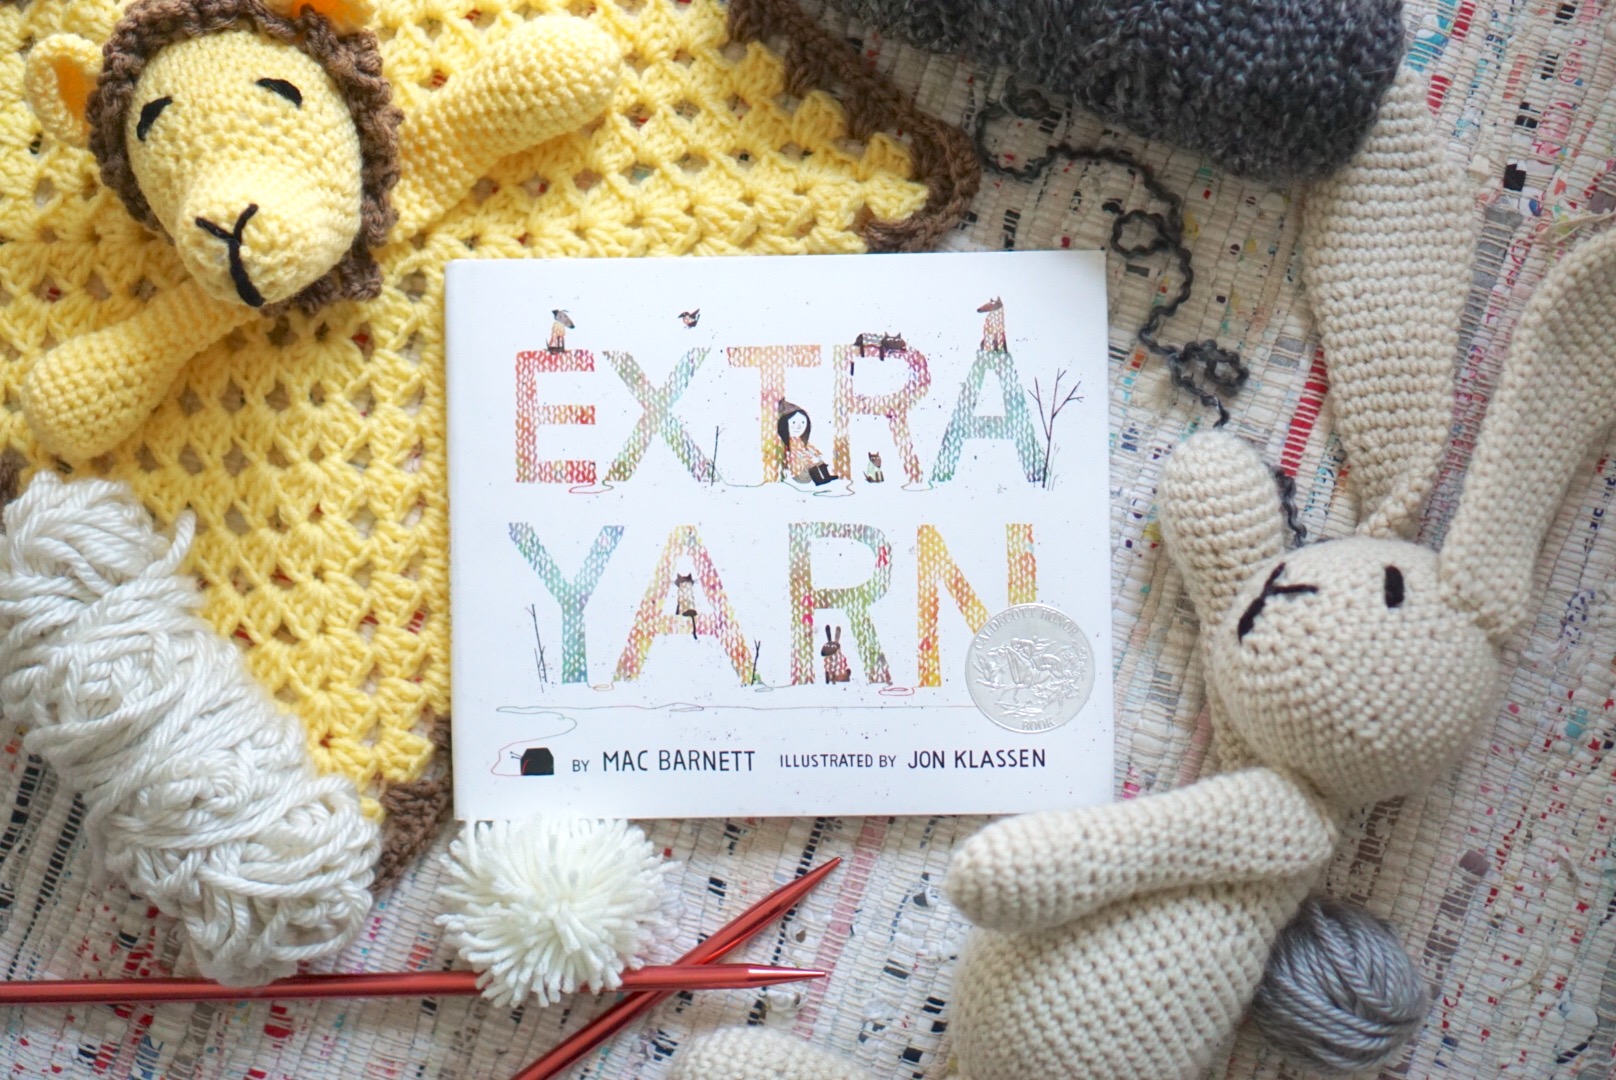 Review: Extra Yarn by Mac Barnett & Illustrated by Jon Klassen